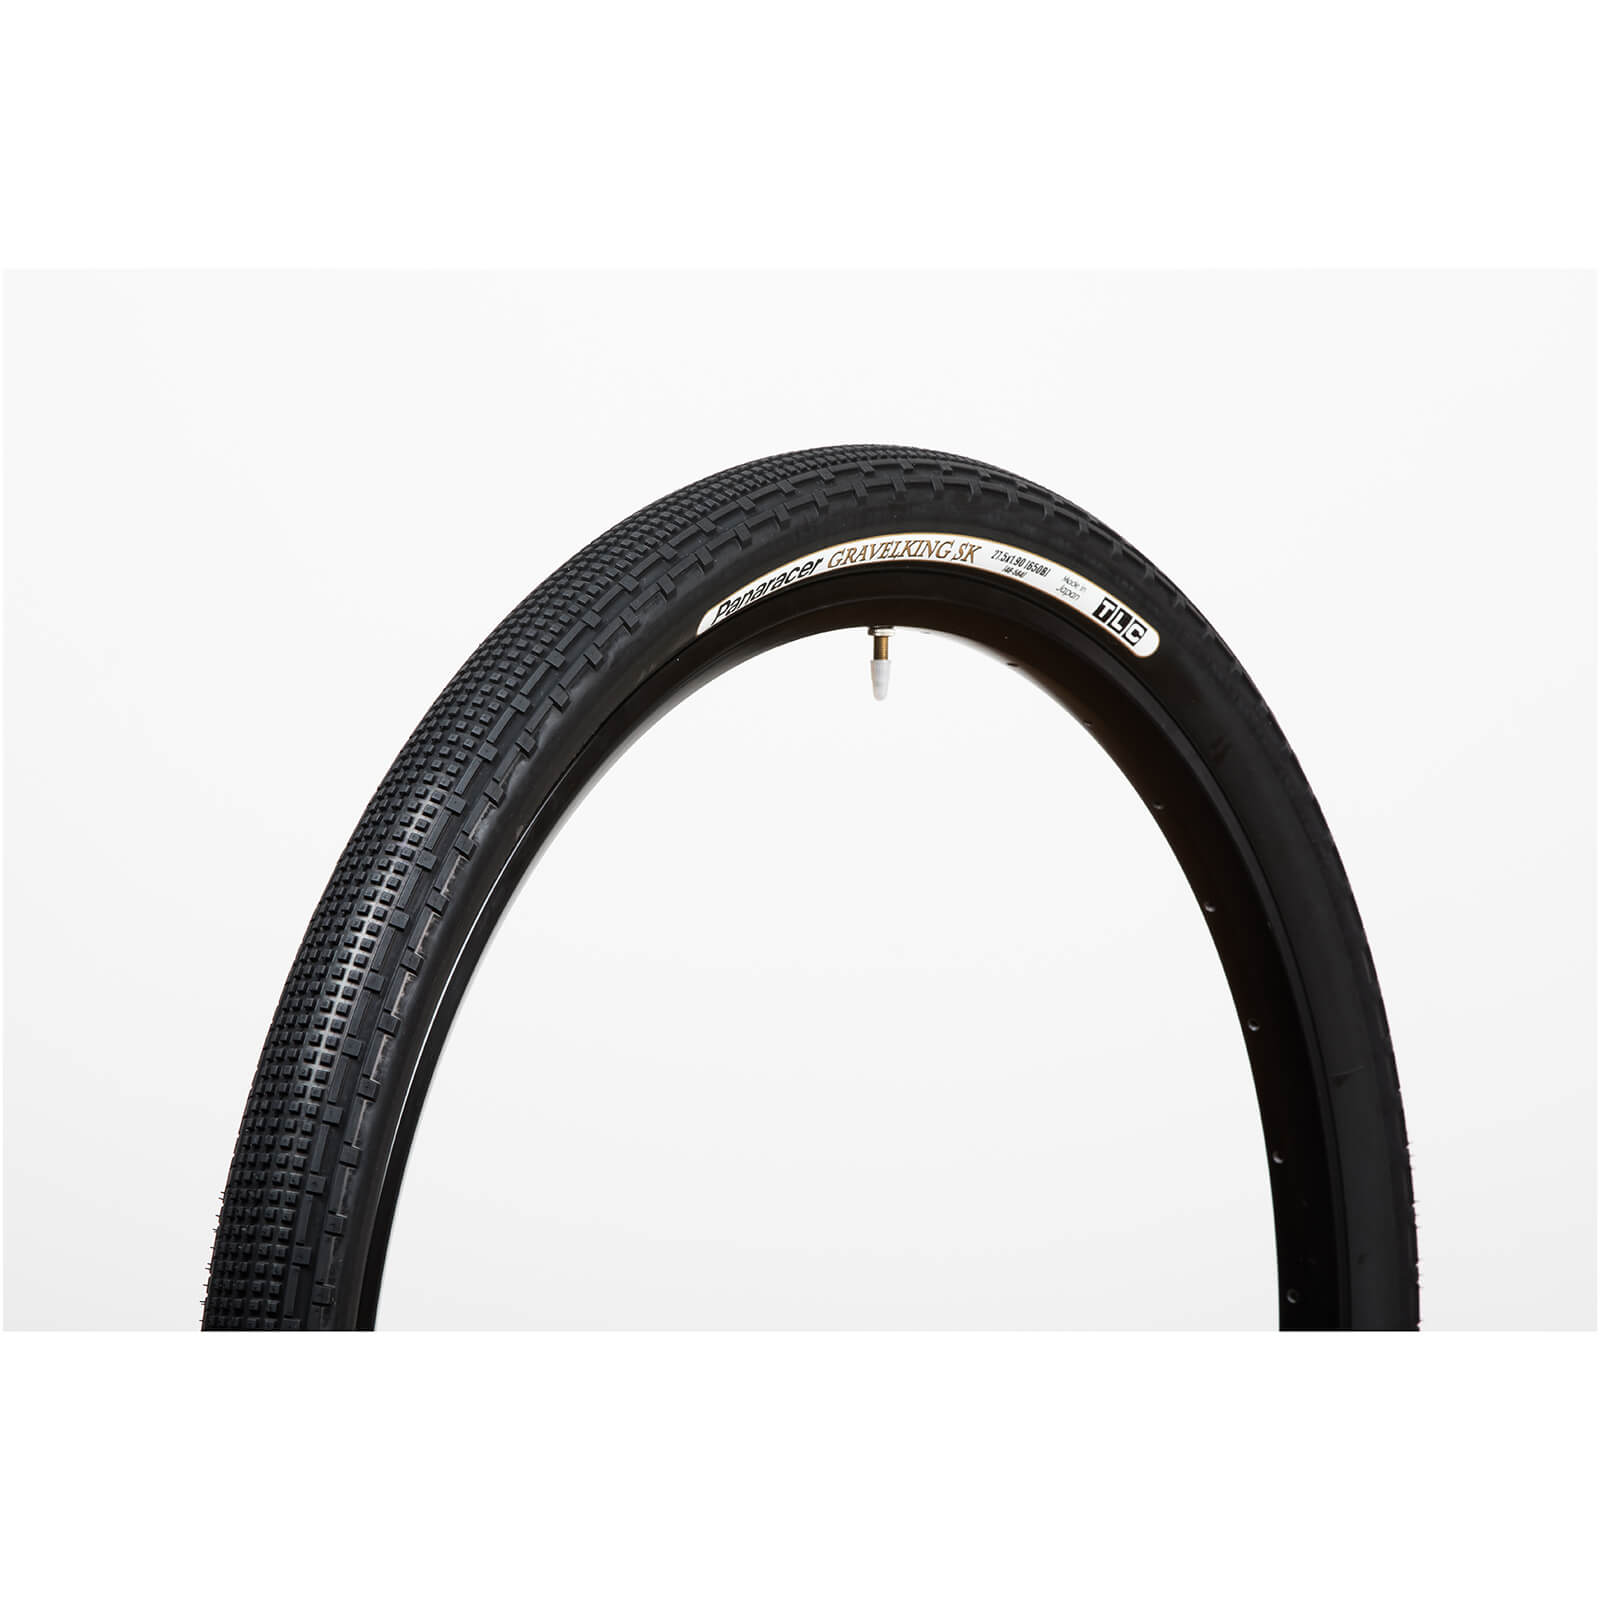 Panaracer Gravel King SK Tubeless Compatible Clincher Tyre - 27.5in x 1.75in - Black